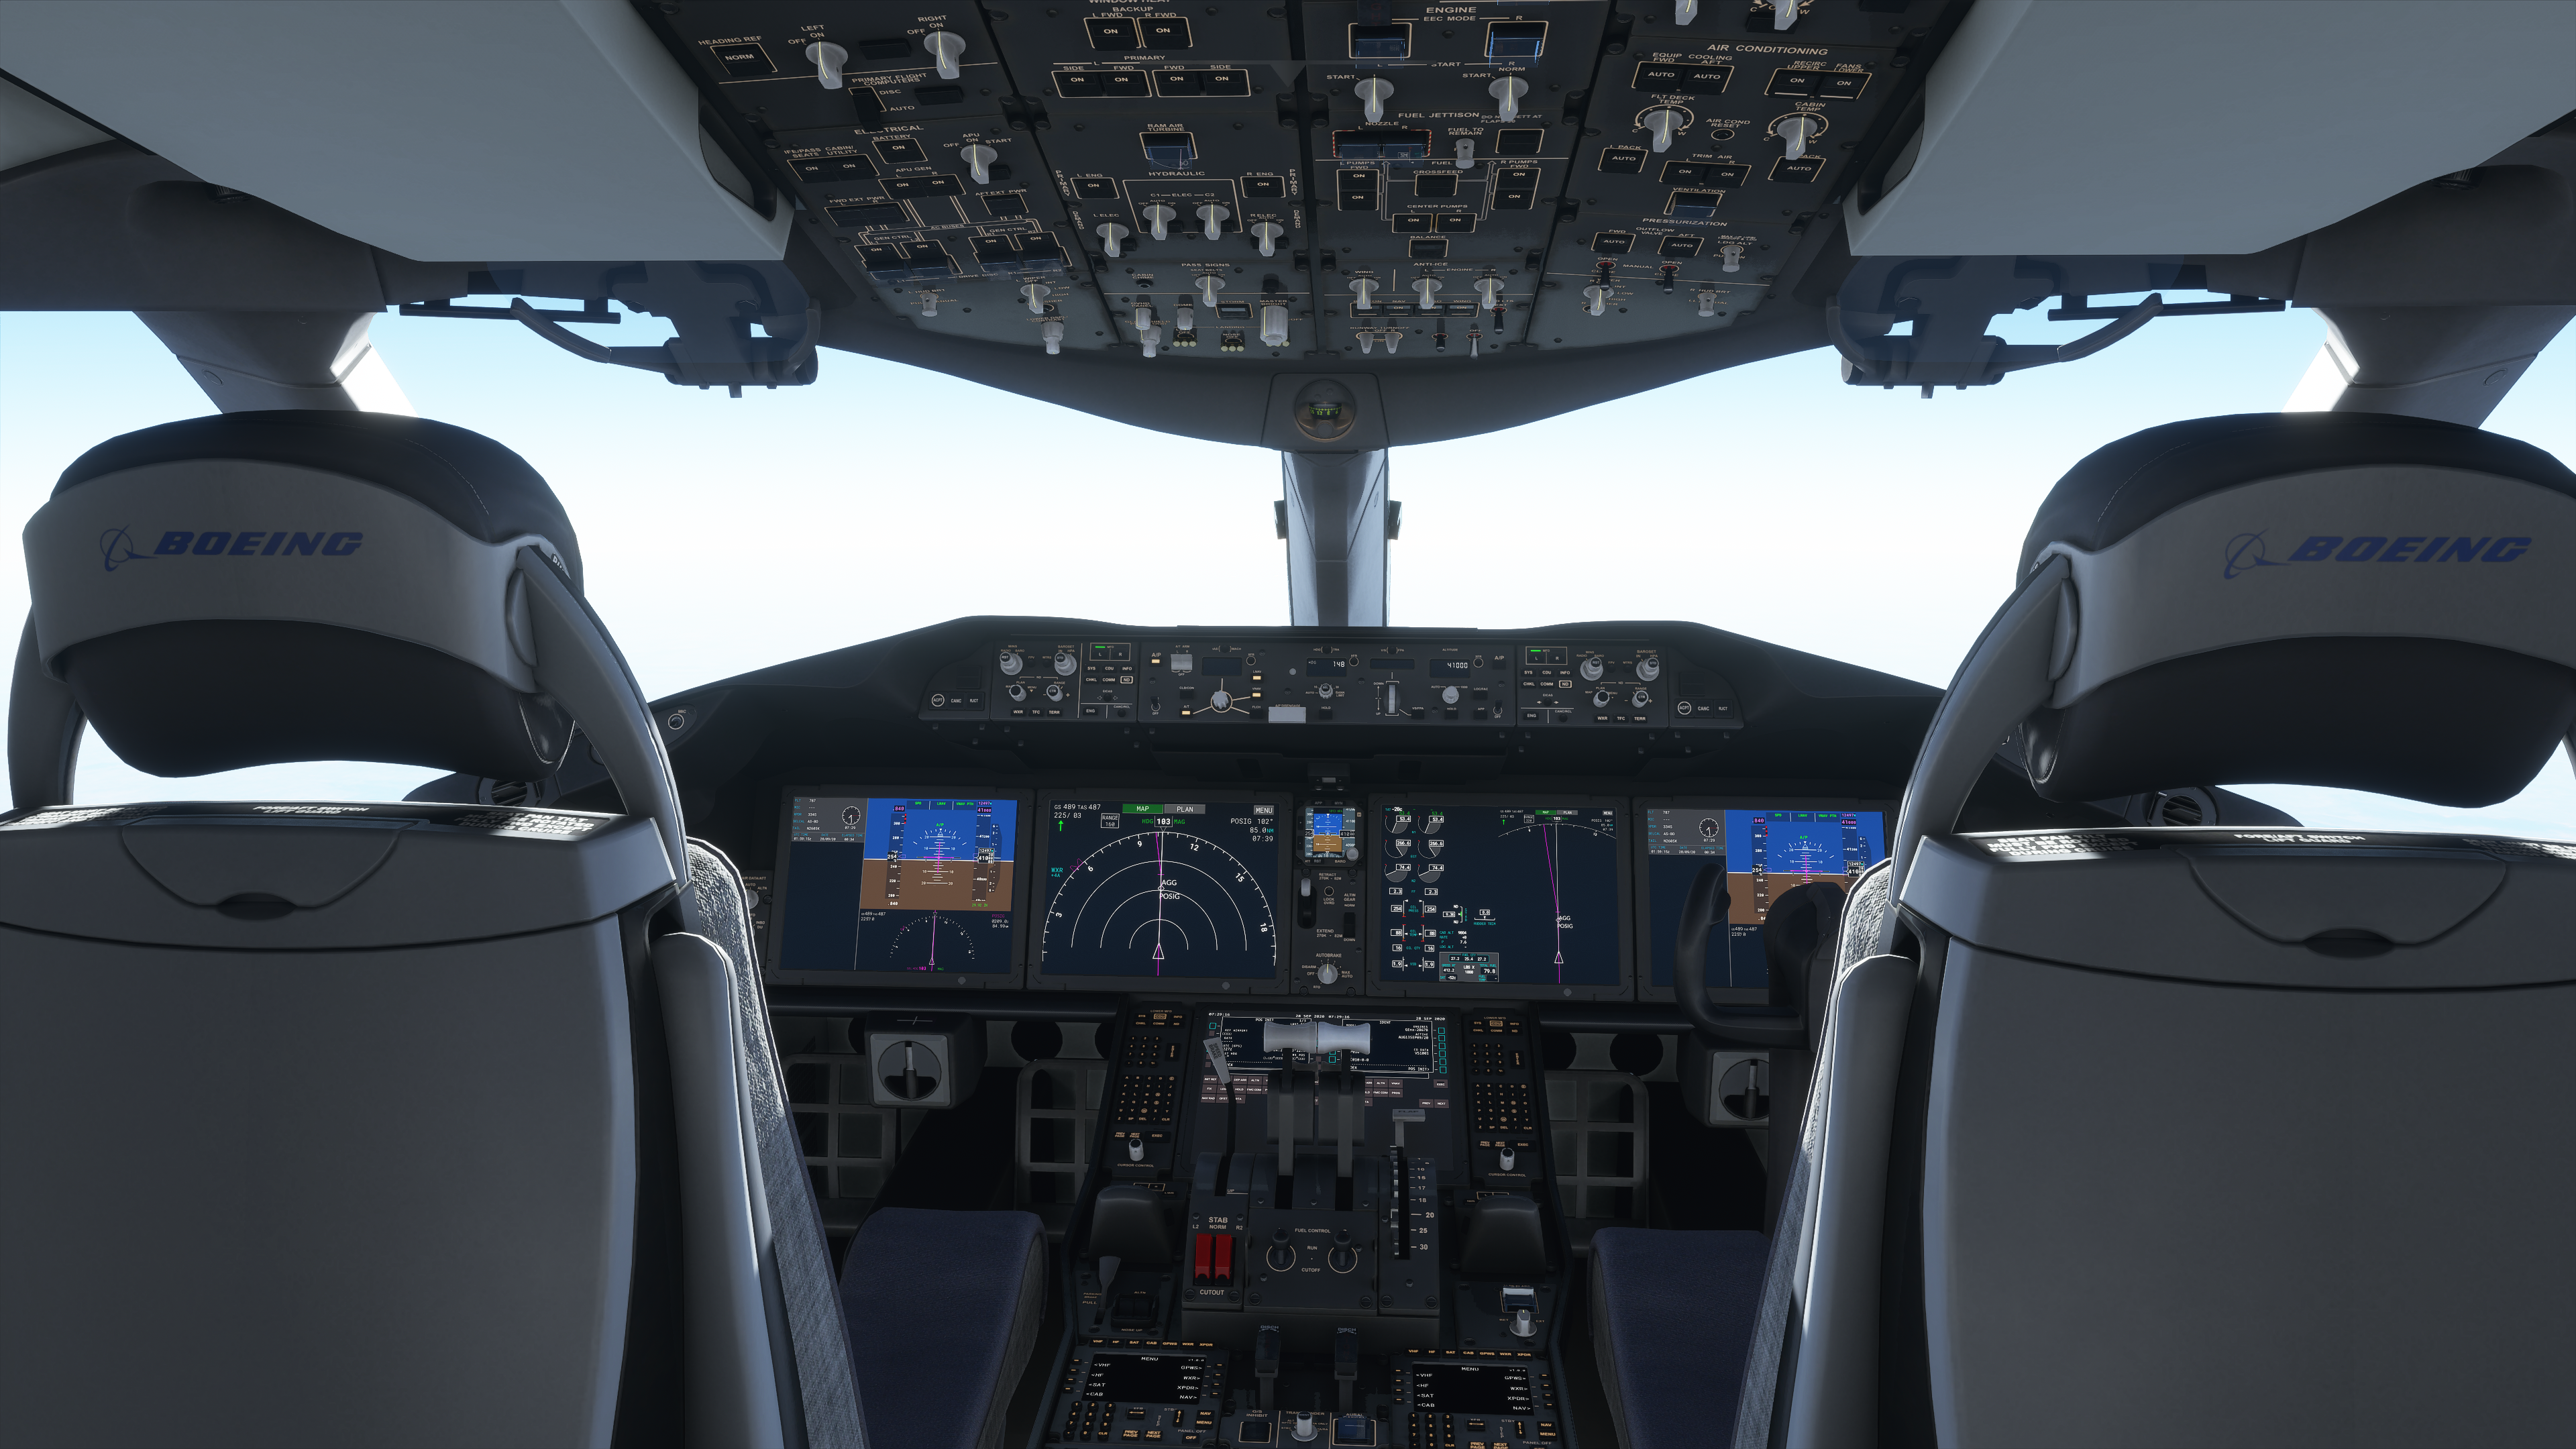 General 3840x2160 flight simulator Microsoft Flight Simulator Microsoft Flight Simulator 2020 Boeing 787 cockpit aircraft flying PC gaming screen shot passenger aircraft vehicle